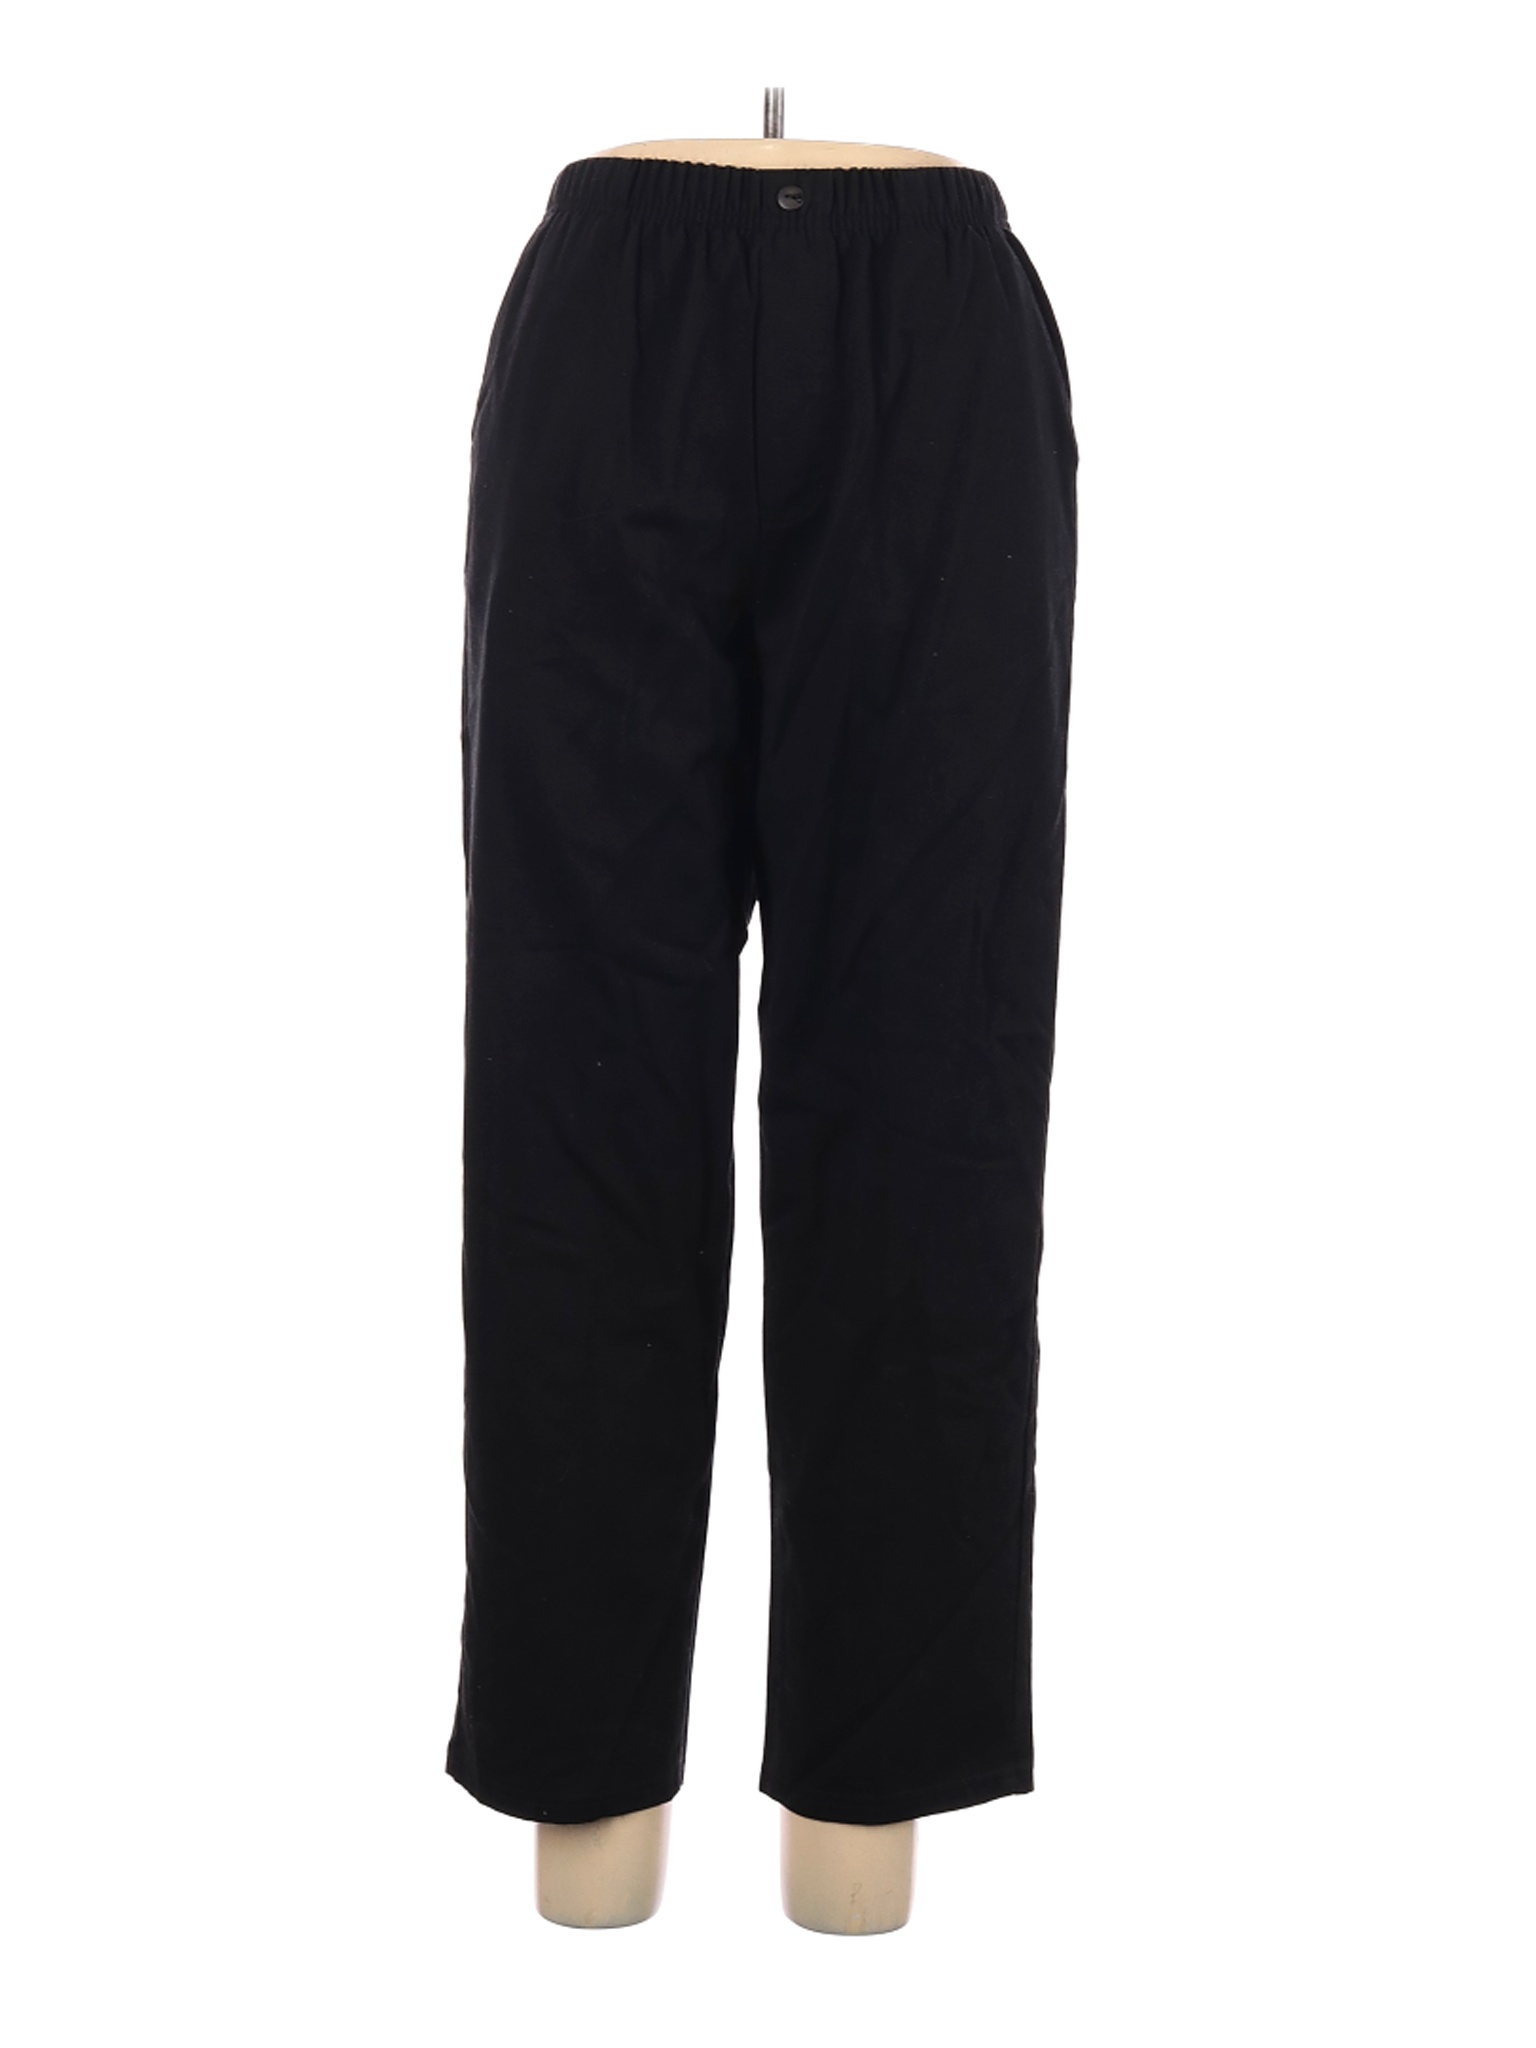 Bobbie Brooks Women Black Casual Pants 12 Petites | eBay